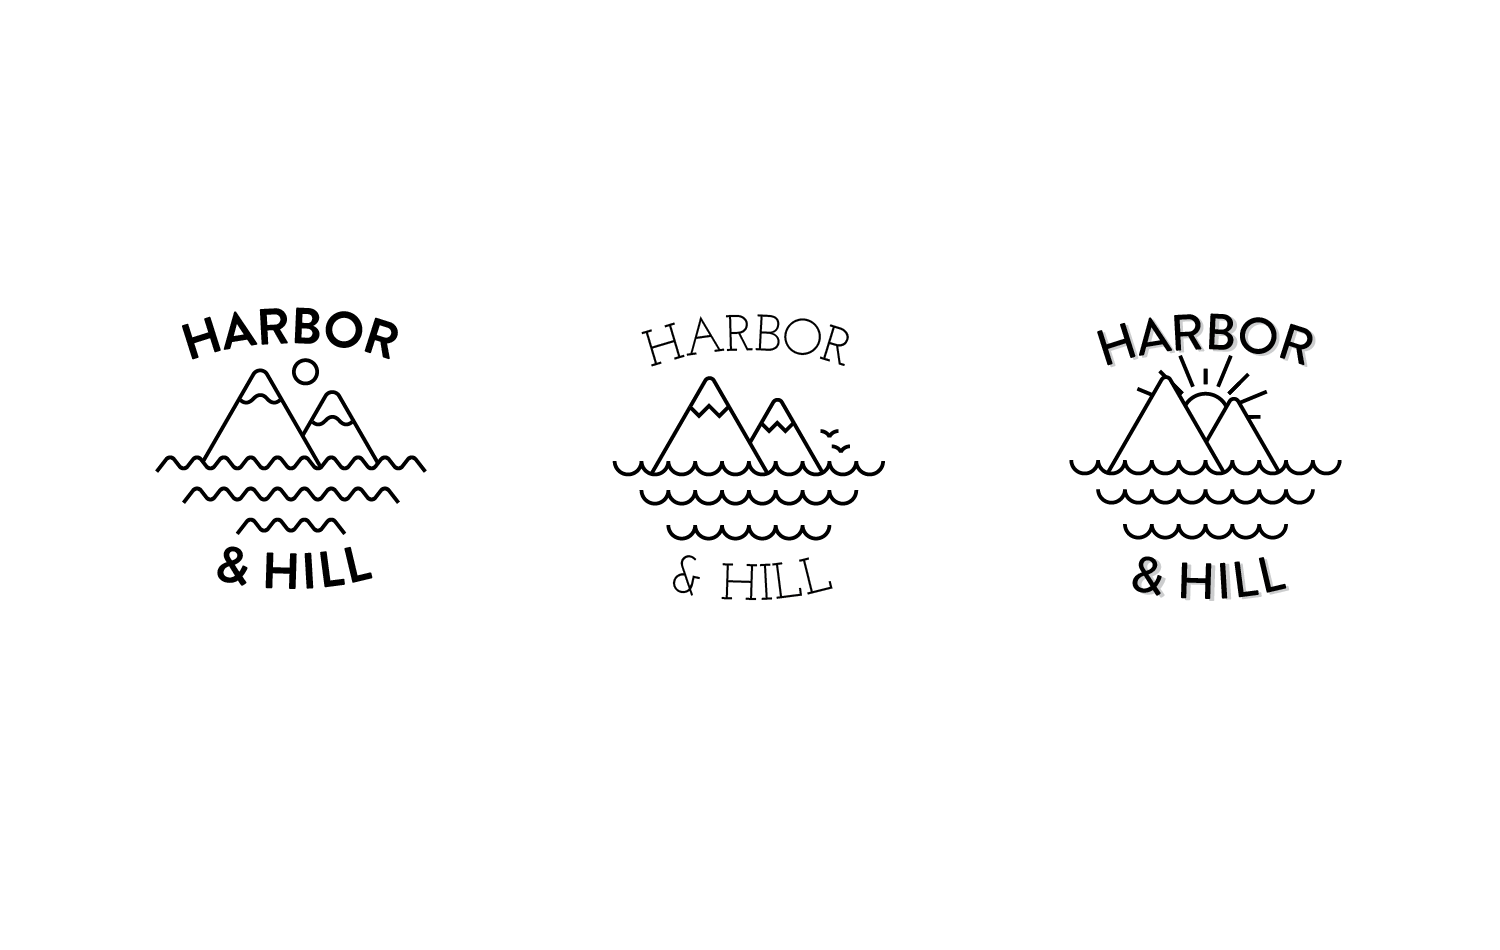 Harbor & Hill designs